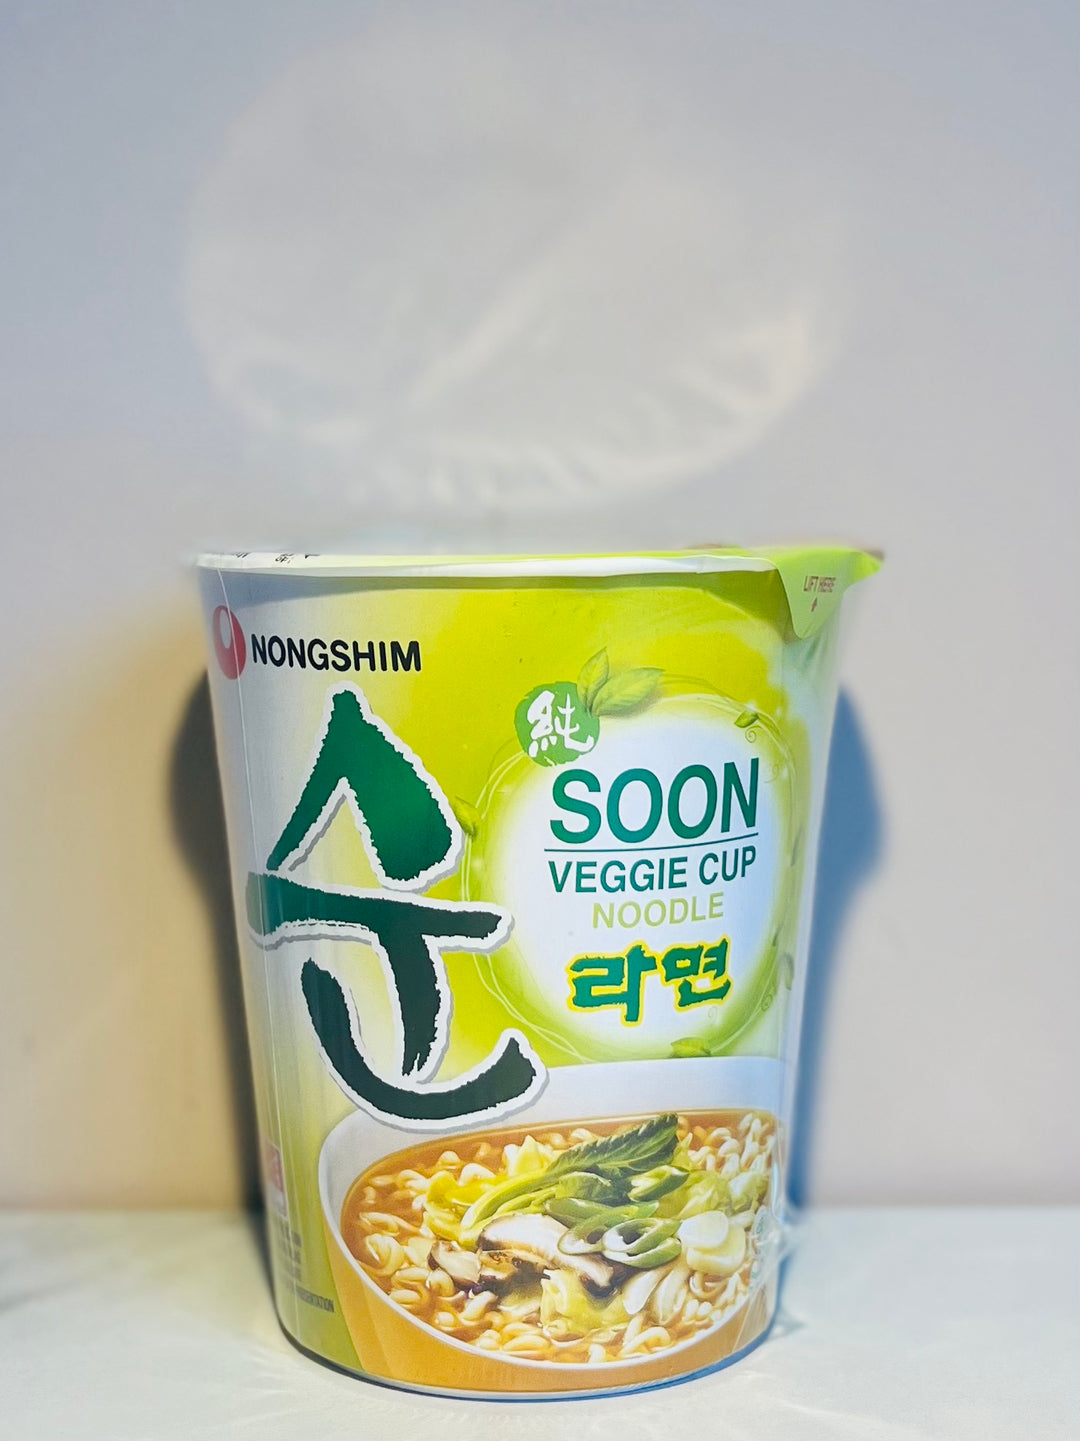 农心素菜拉面杯67g Nongshim Soon Veggie Cup Noodle